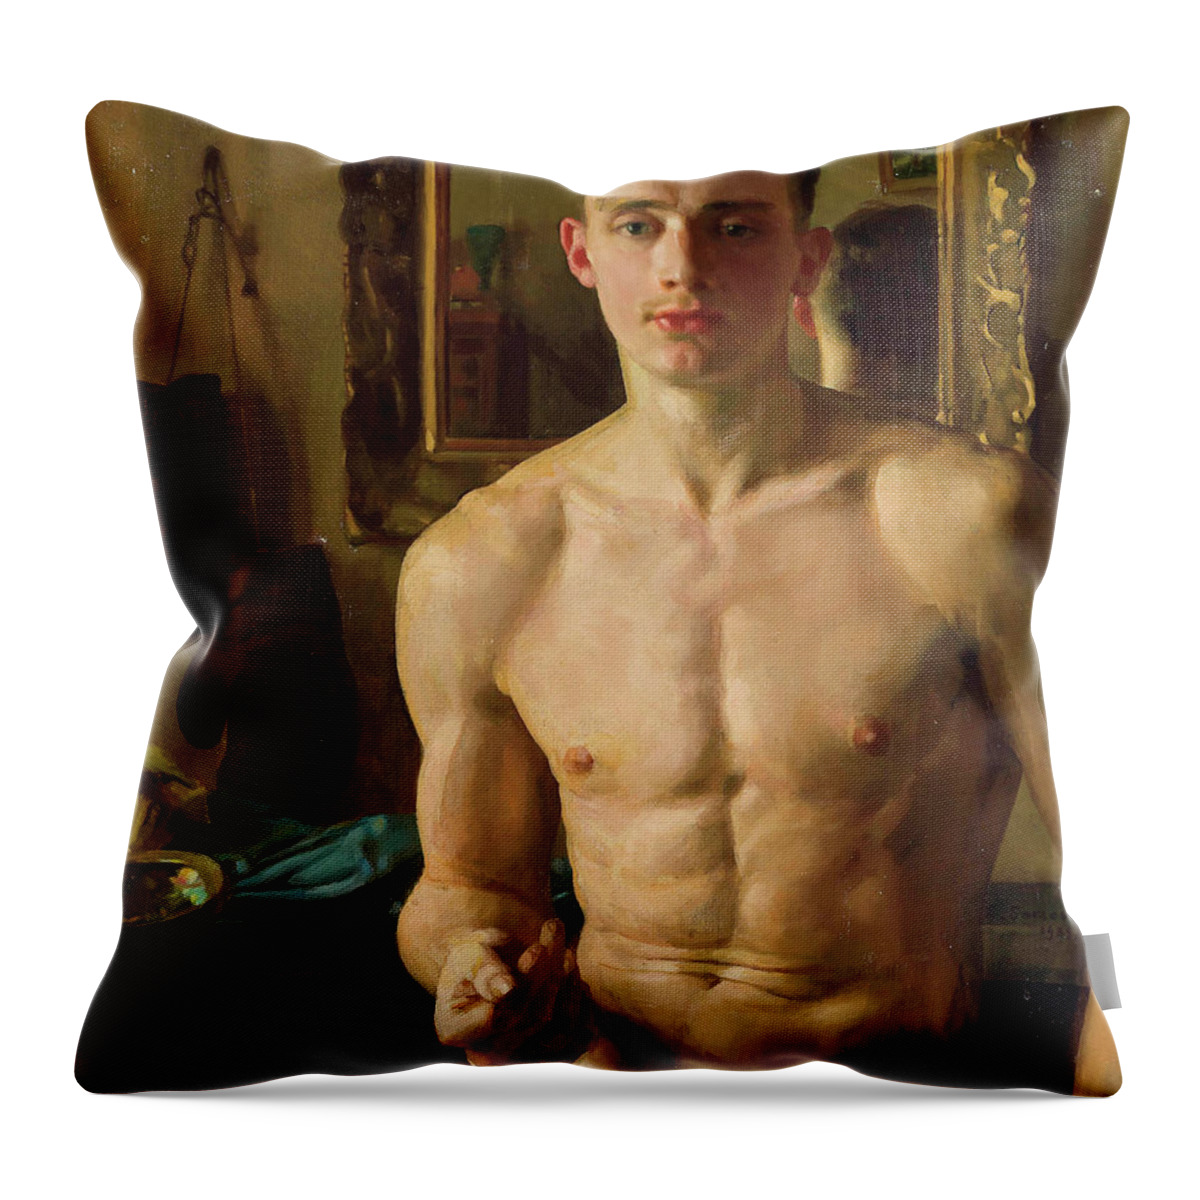 Konstantin Somov Throw Pillow featuring the painting The Boxer by Konstantin Somov